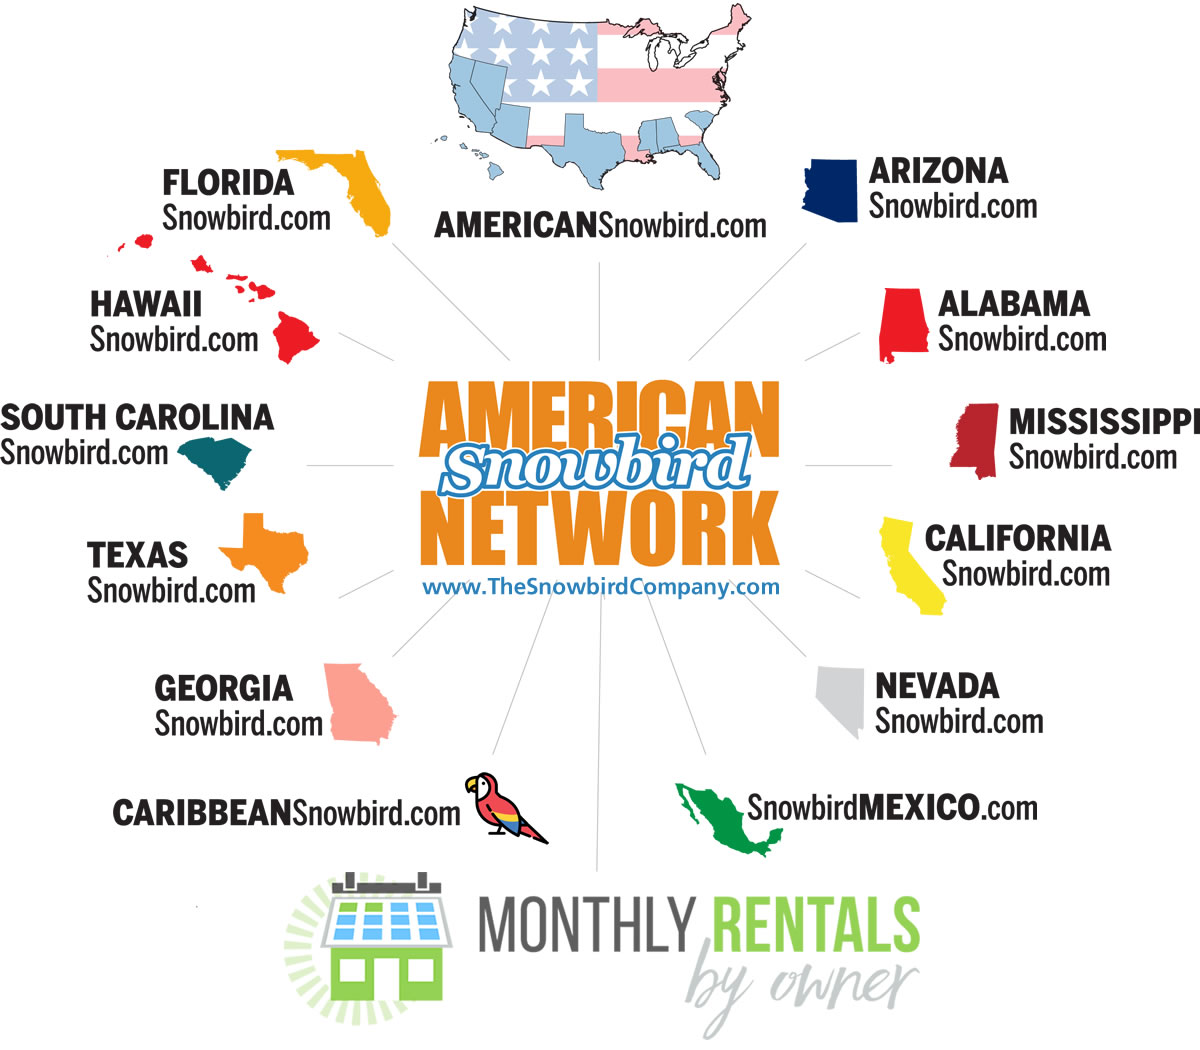 The American Snowbird Network